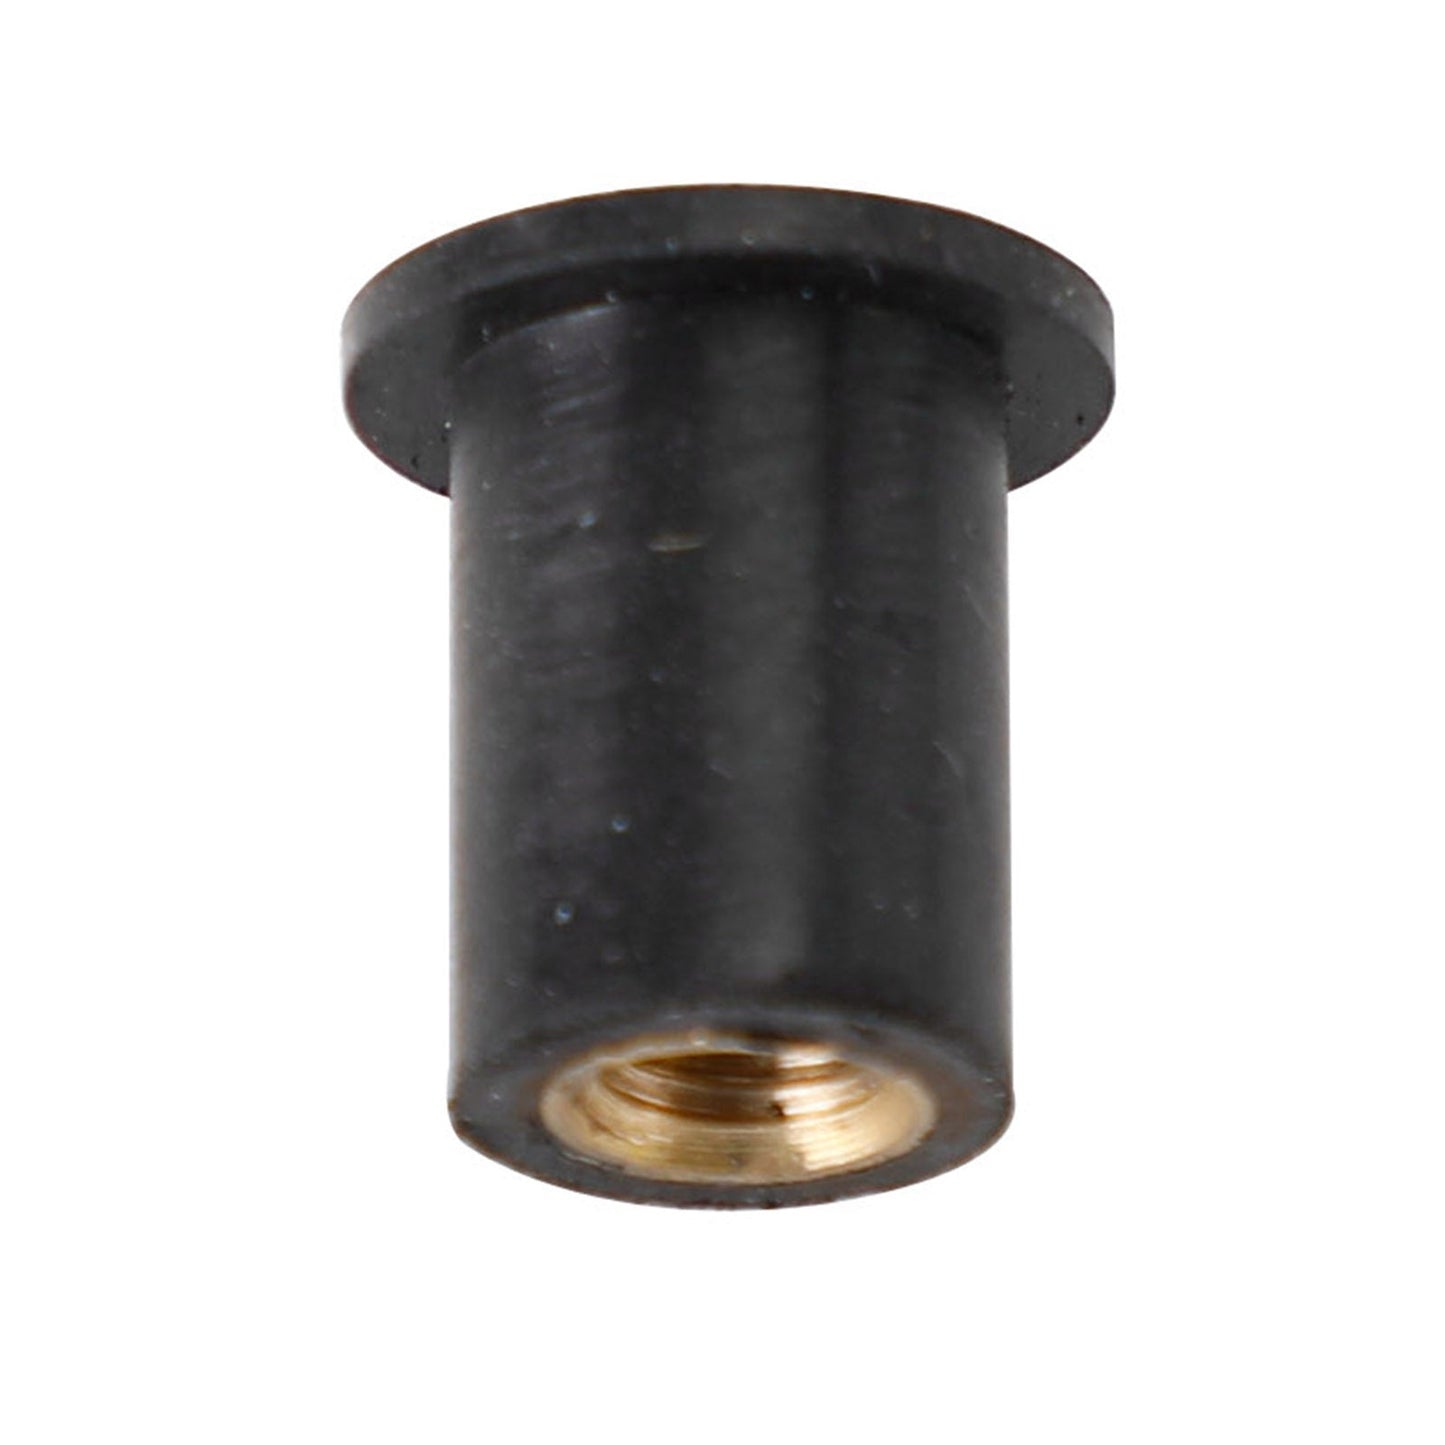 100 Quantity M5 Rubber Well Nut Windscreen & Fairing 5mm Wellnuts Fits 10mm Hole